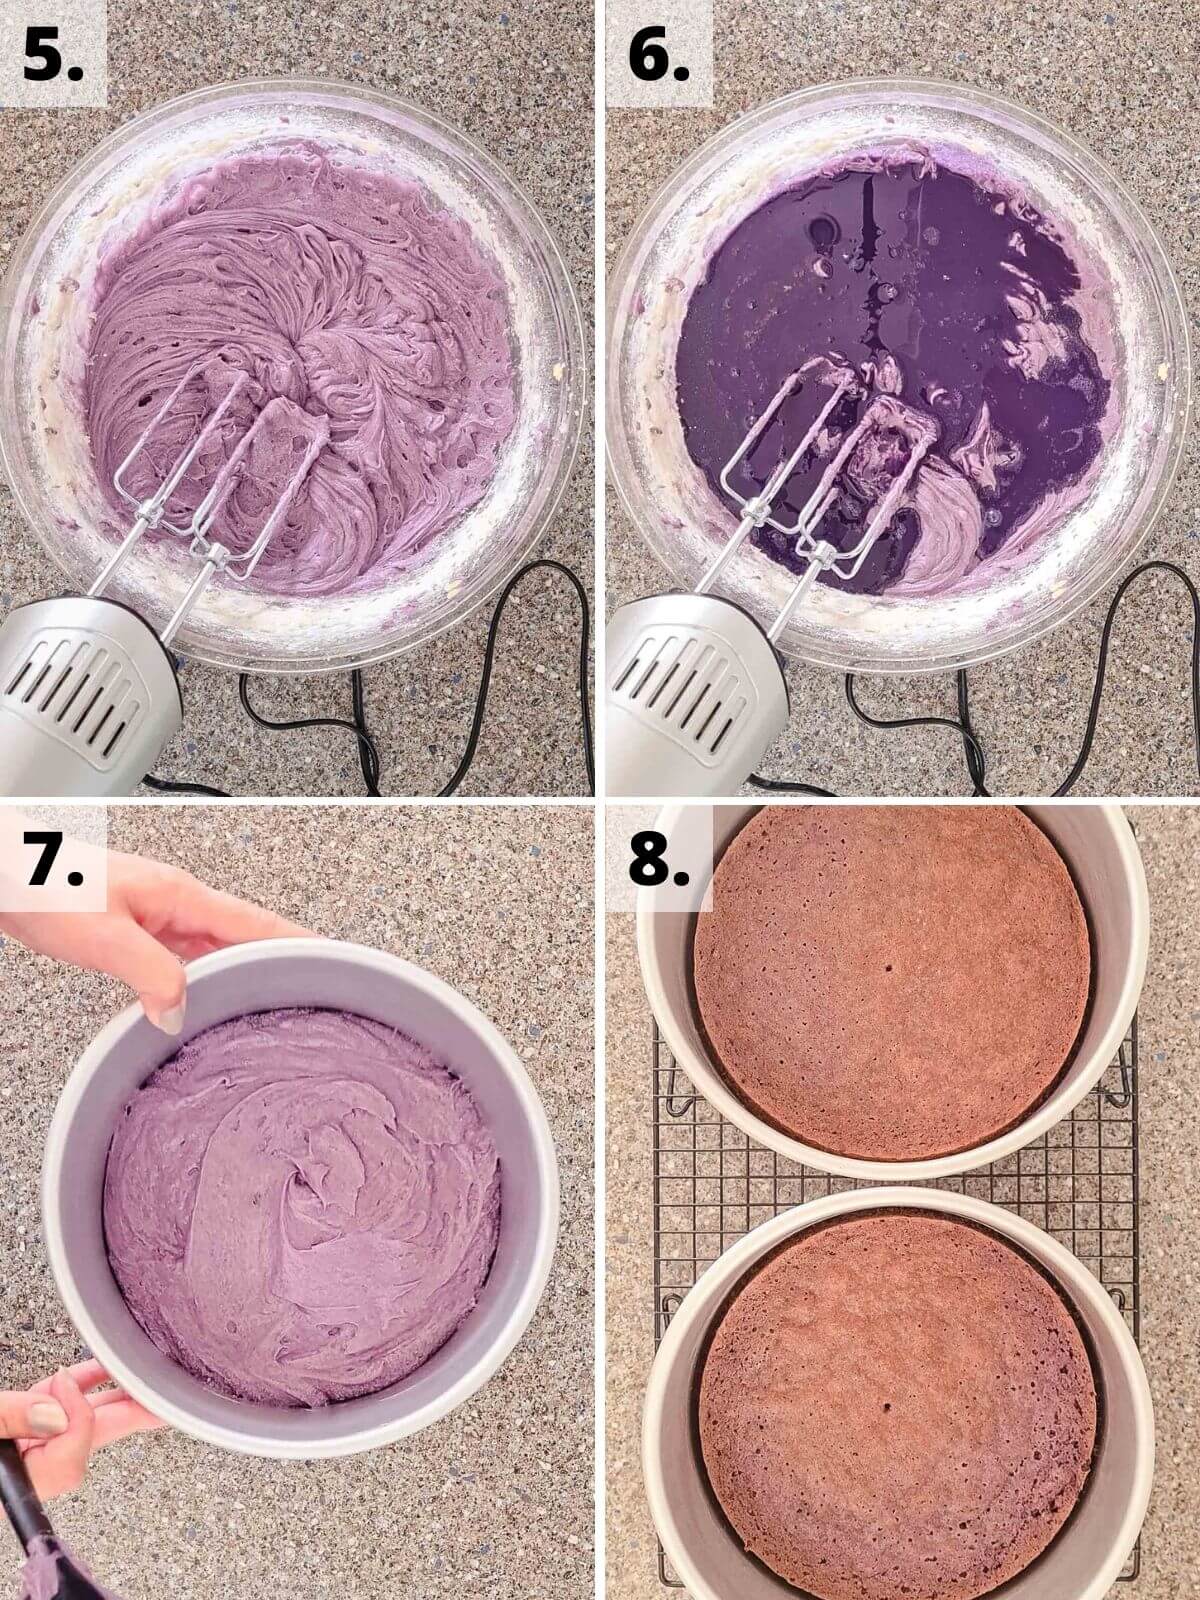 how to make purple yam ube cake recipe method steps 5 to 8.